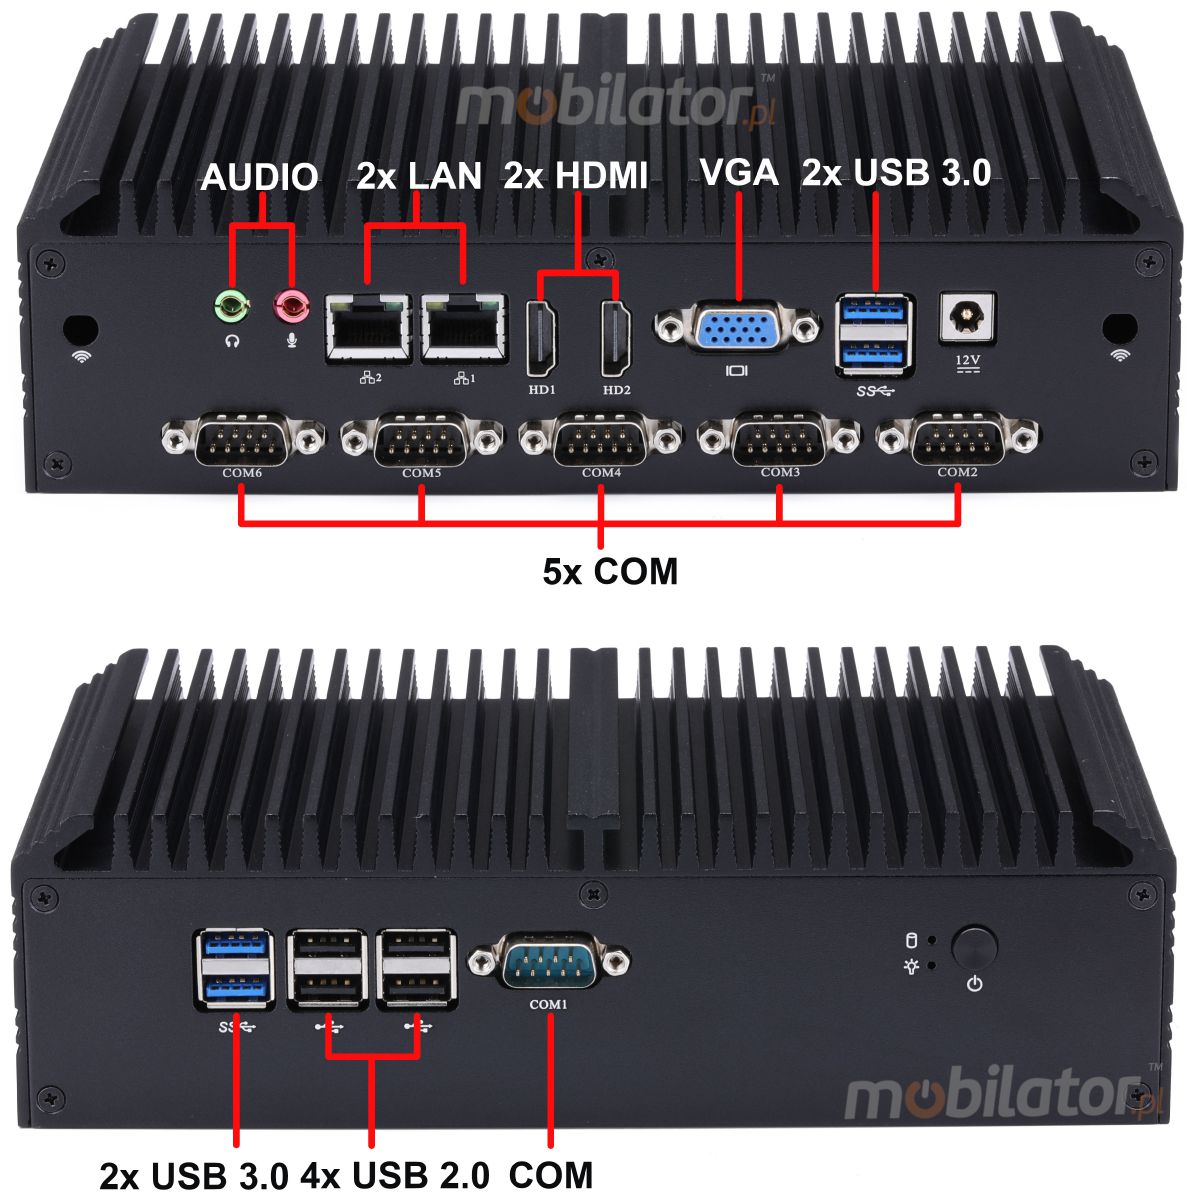 mBox X105 v.2 - Industrial Mini Computer with Intel Celeron 3855U Processor - M.2 disk - USB 3.0, 2x HDMI and WiFi - Interfaces